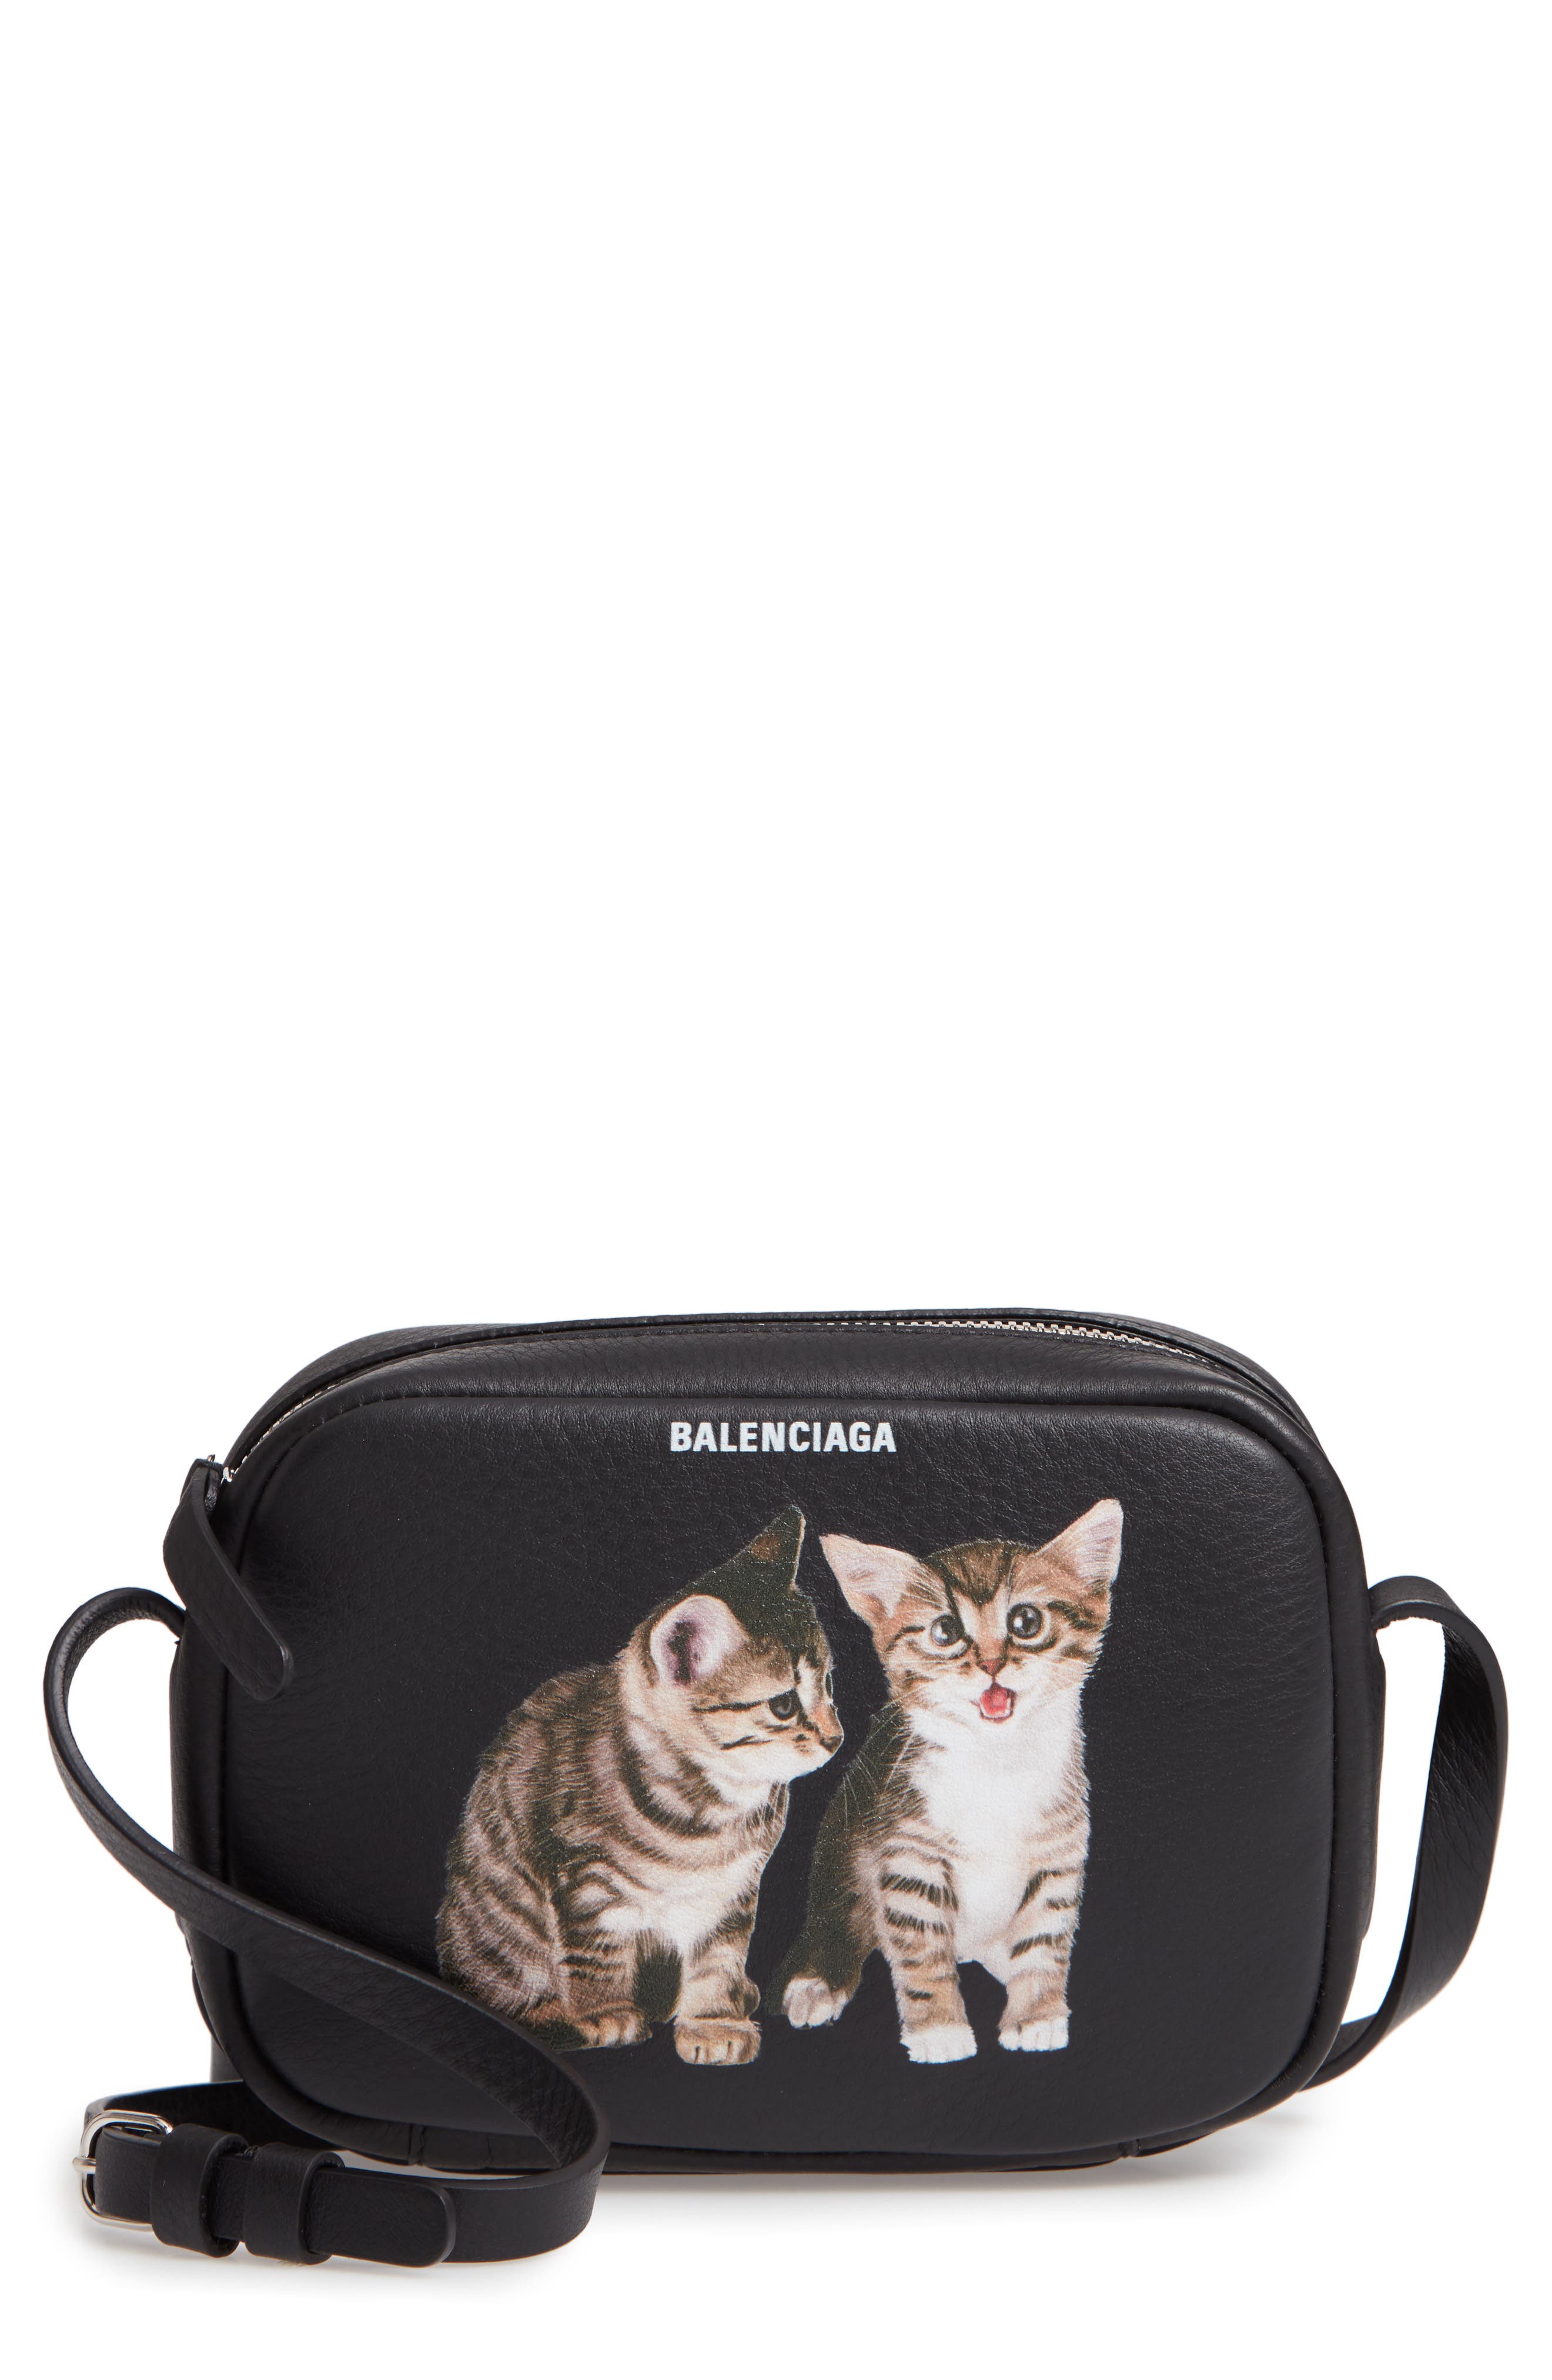 balenciaga bag with dog and cat